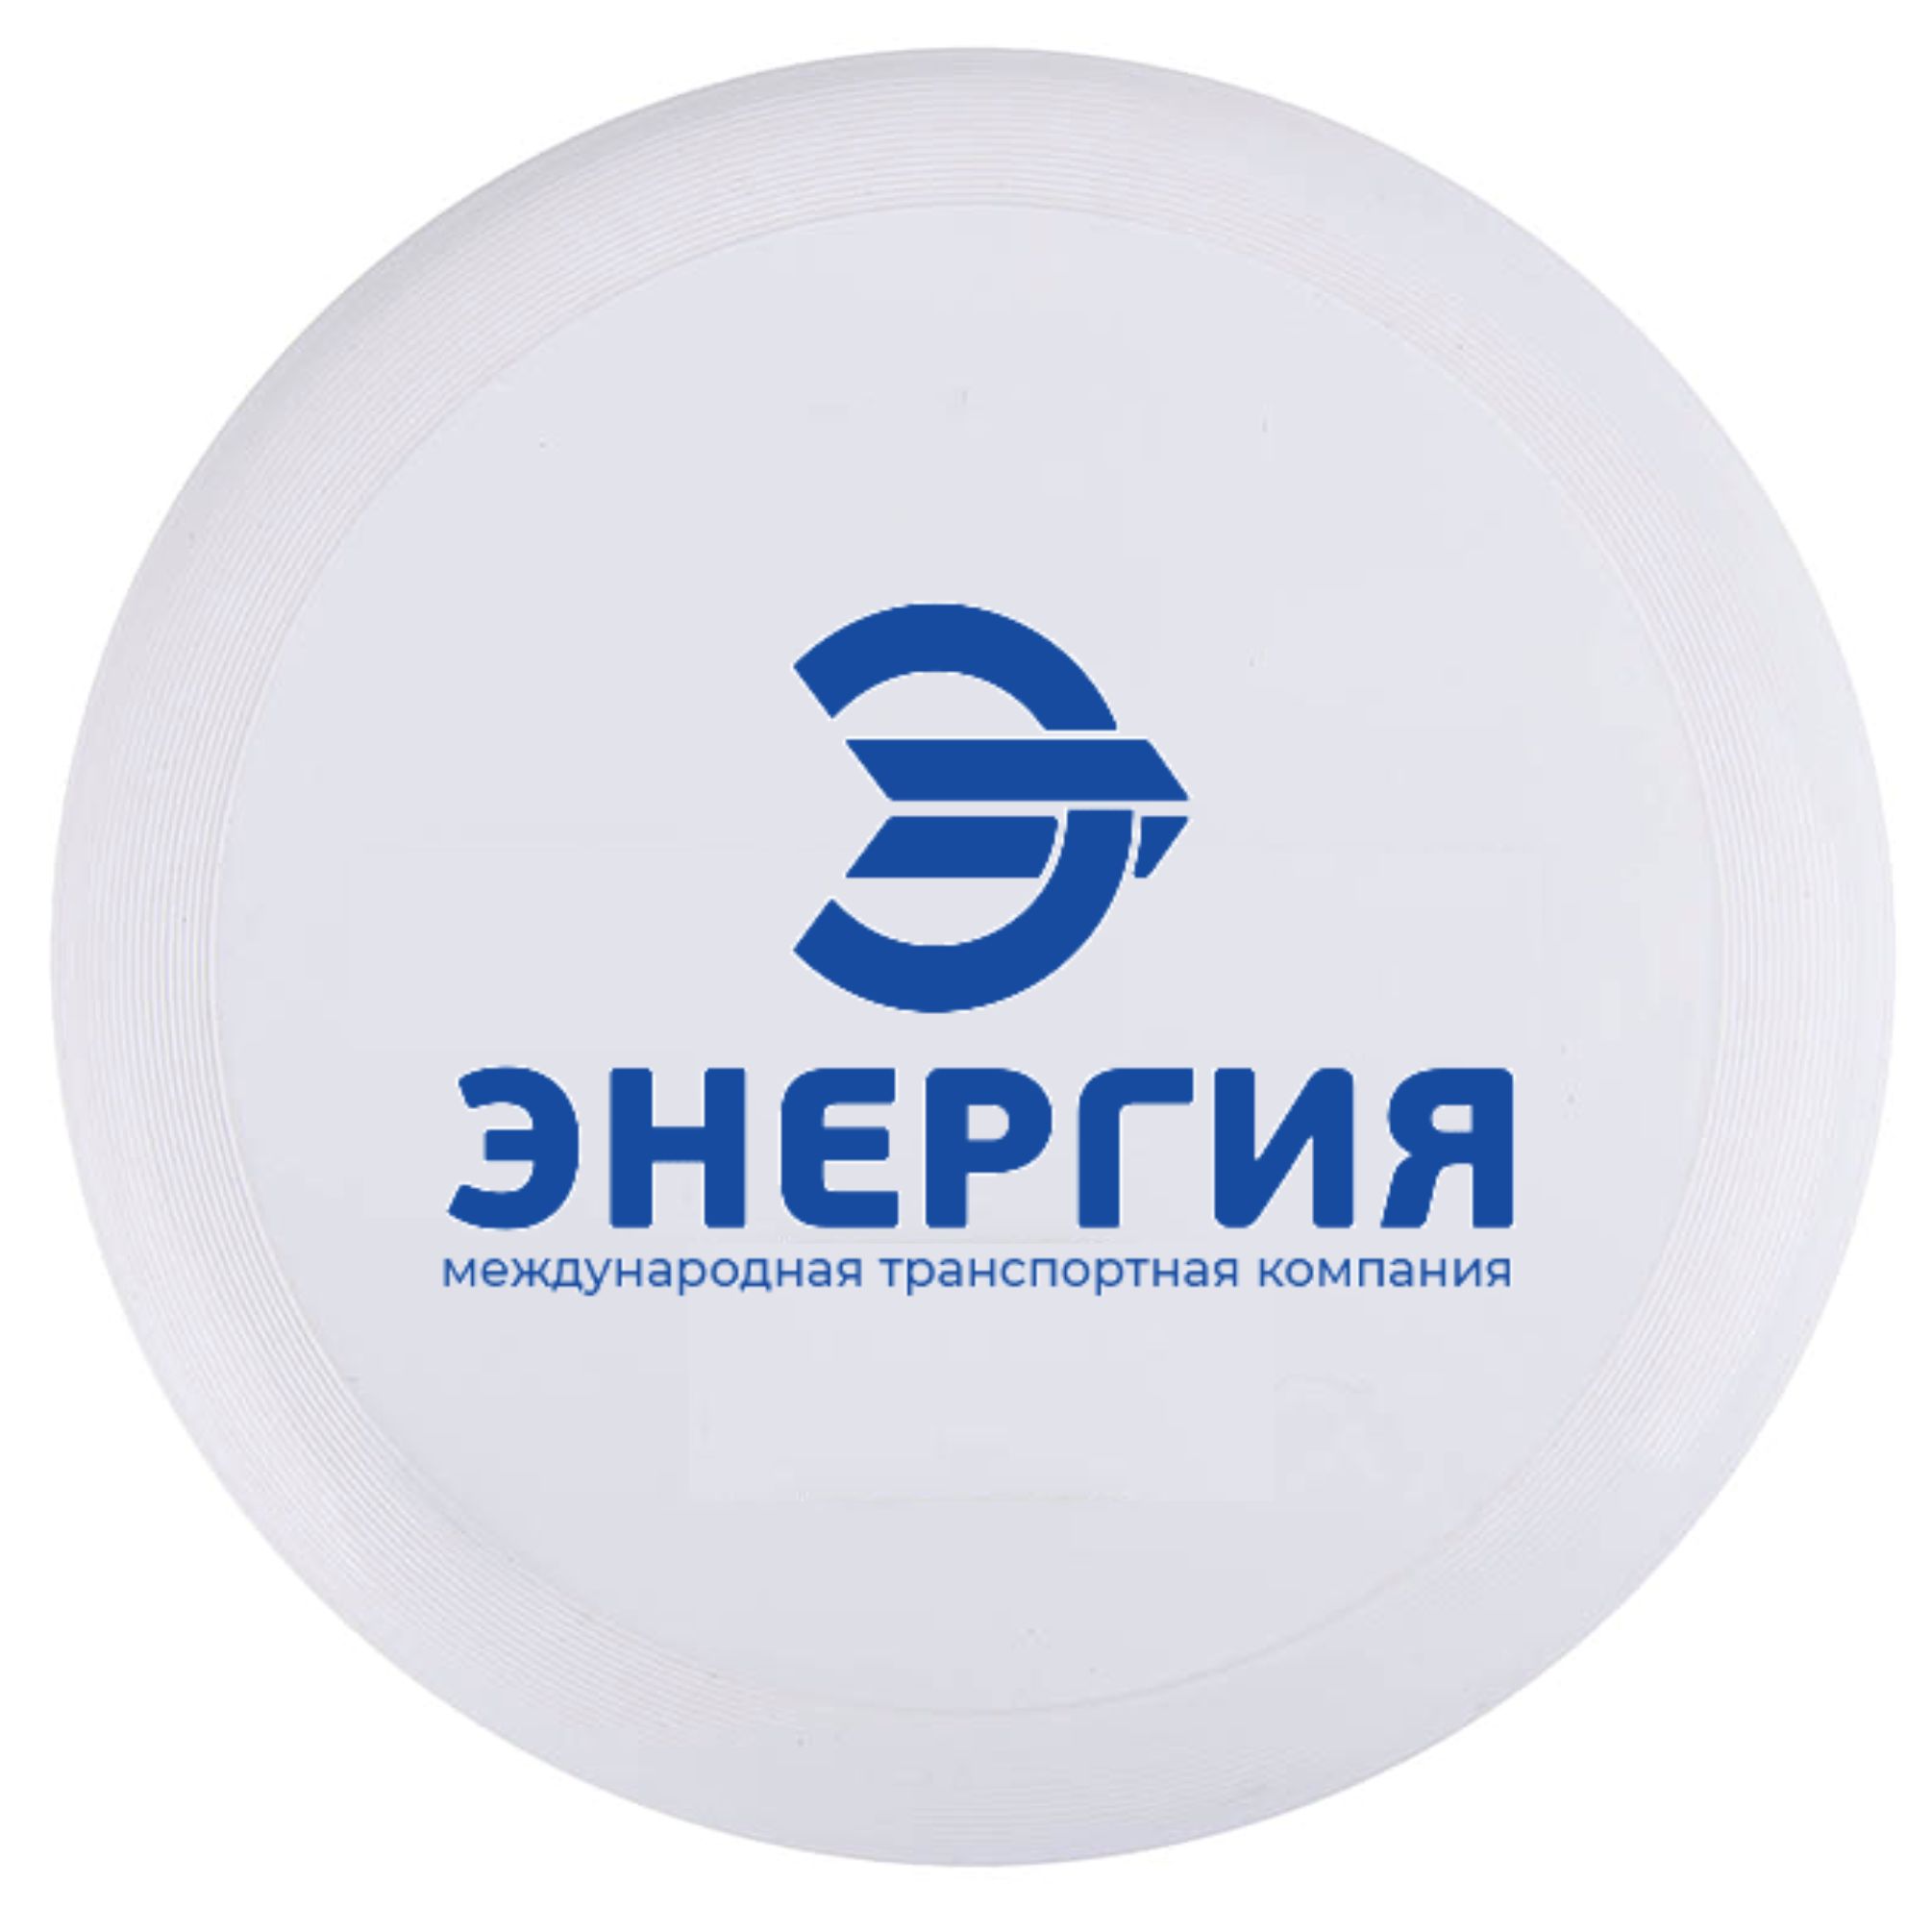 фрисби с логотипом в москве